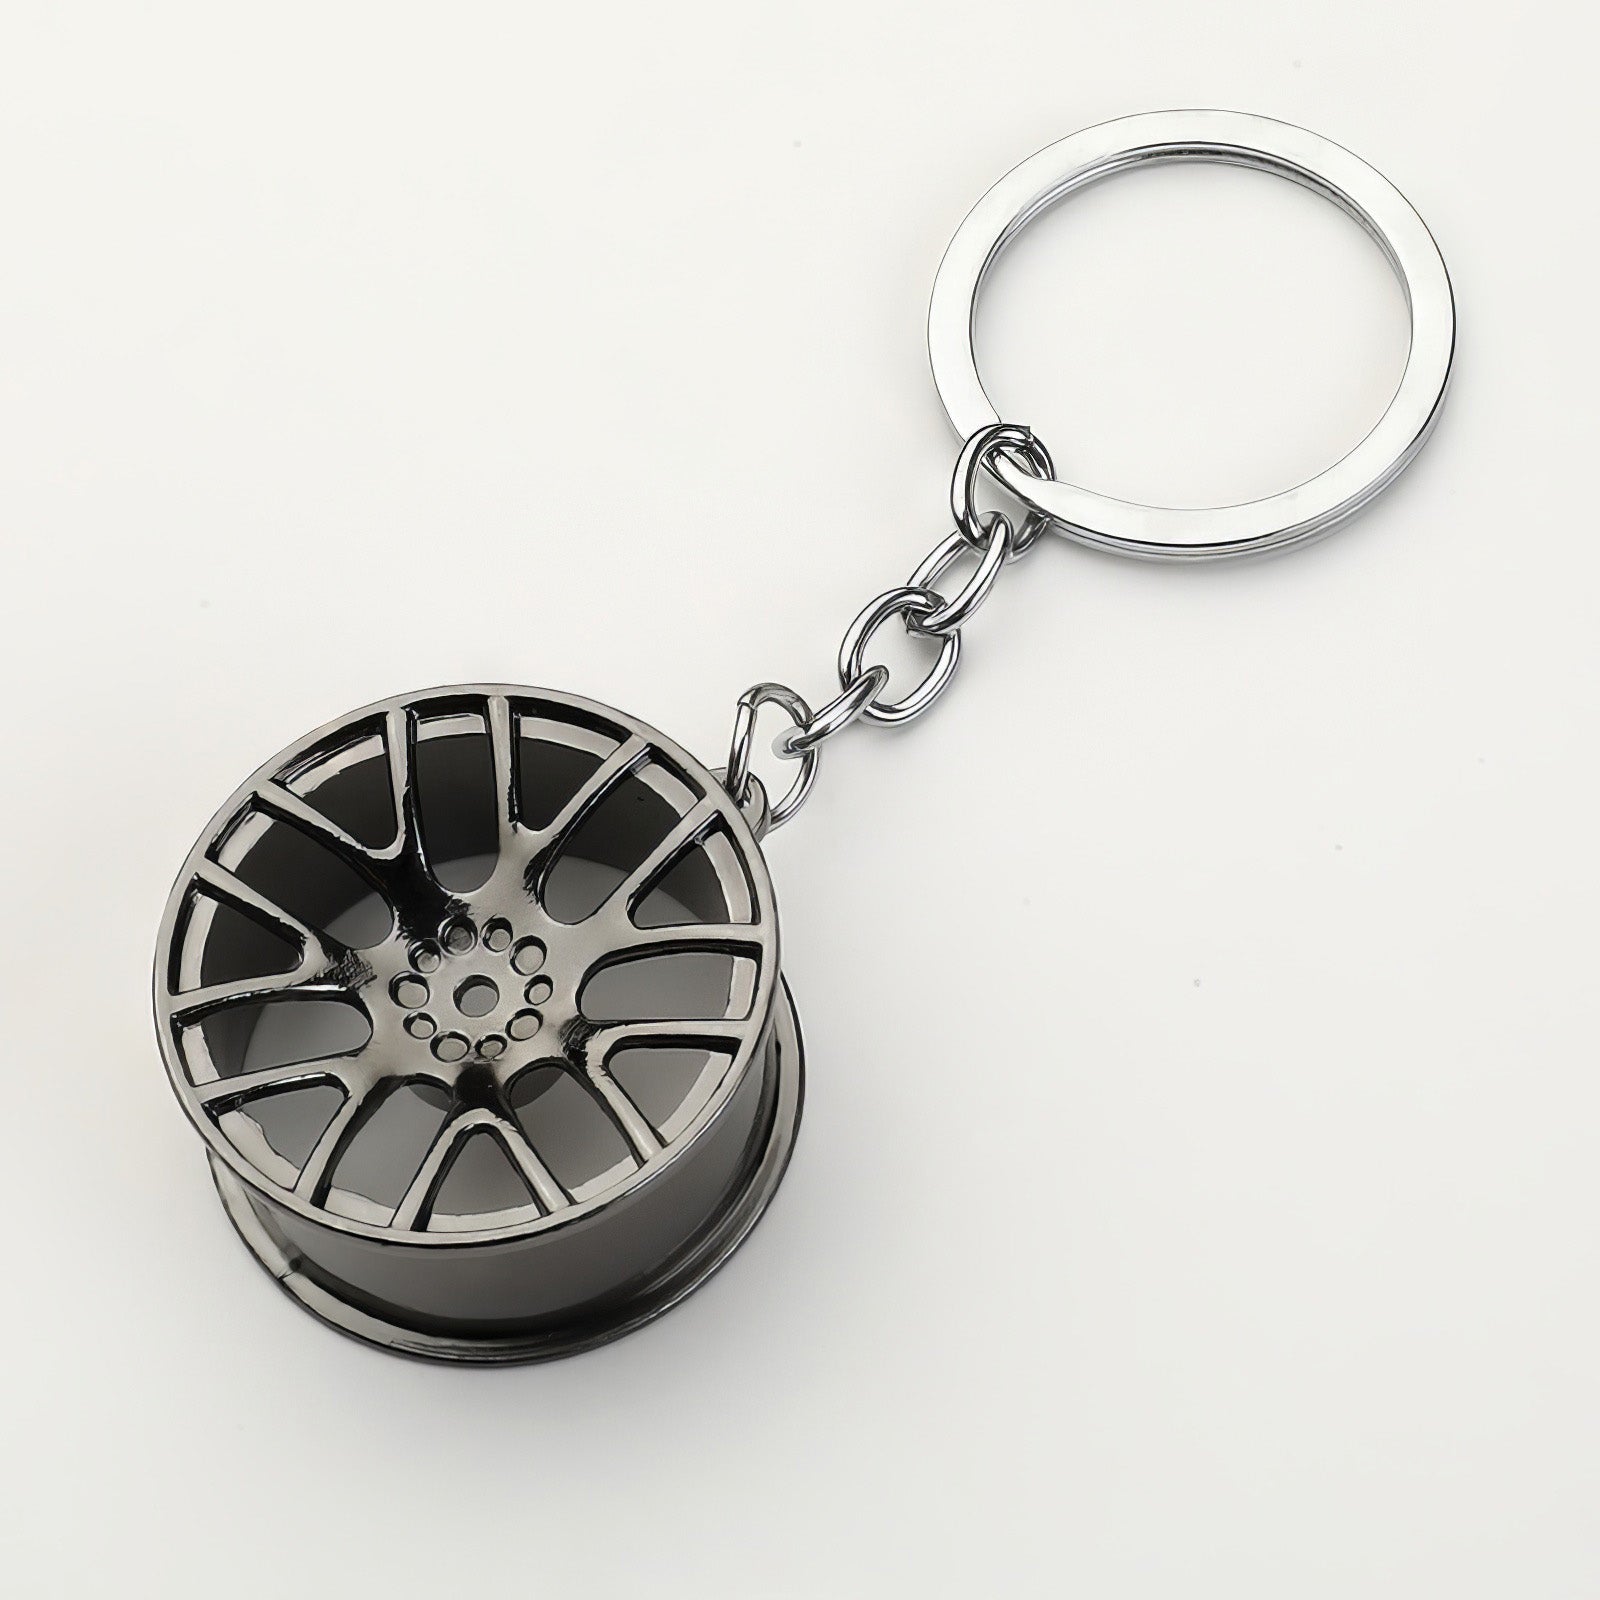 Concave wheel keychain in black.